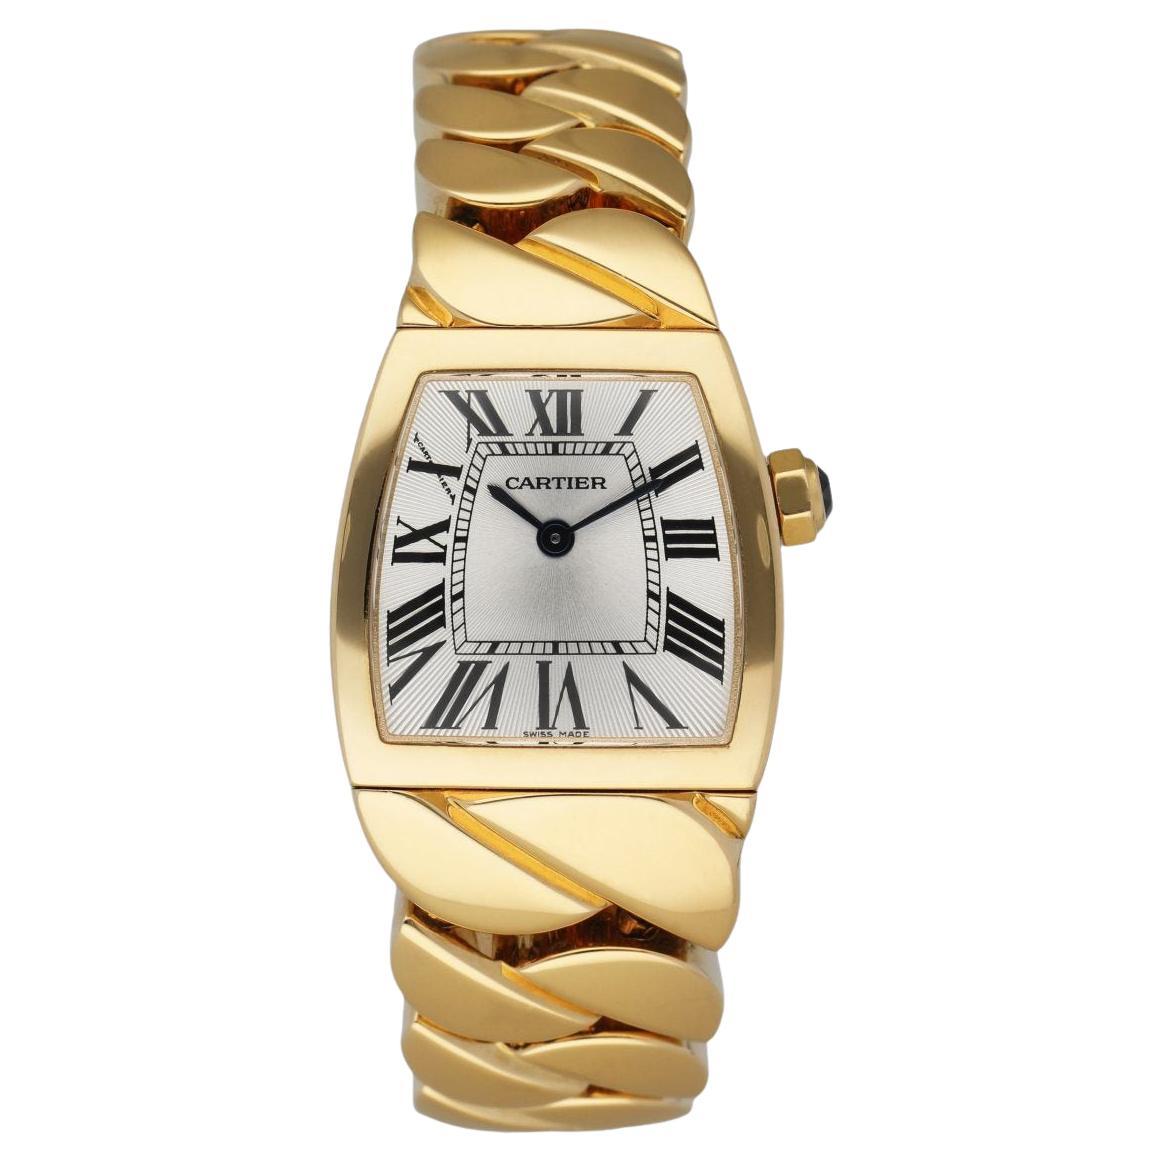 Cartier La Dona 2903 18K Yellow Gold Ladies Watch